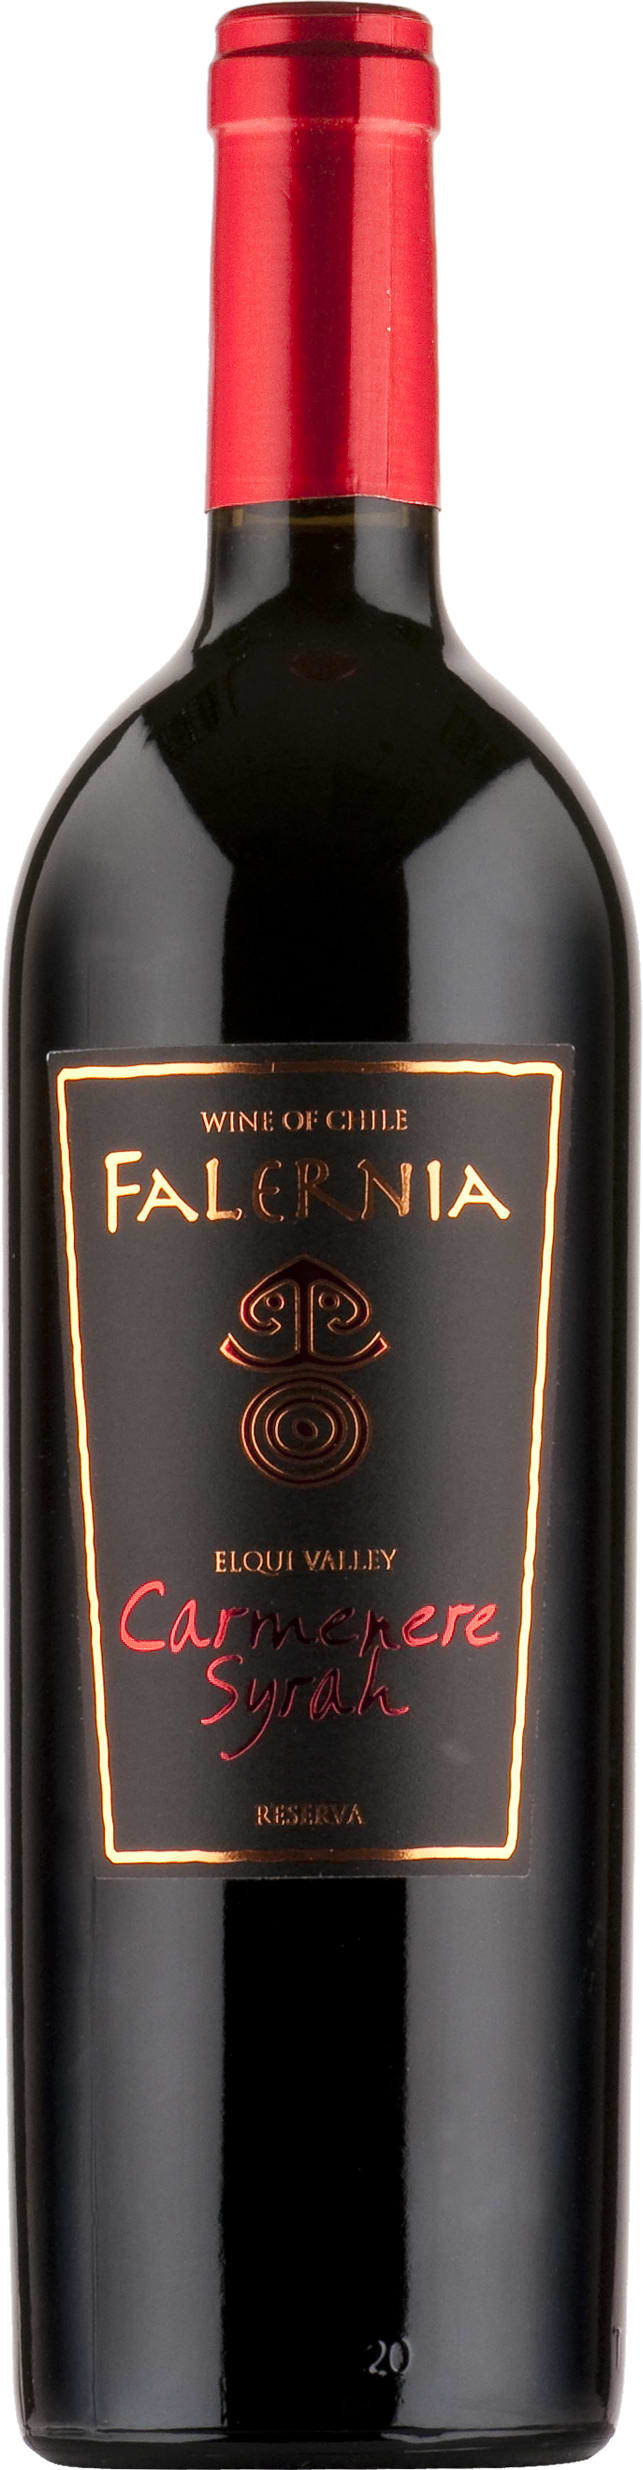 Vina Falernia Carmenere/Syrah Gran Reserva 2019 75cl - Buy Vina Falernia Wines from GREAT WINES DIRECT wine shop